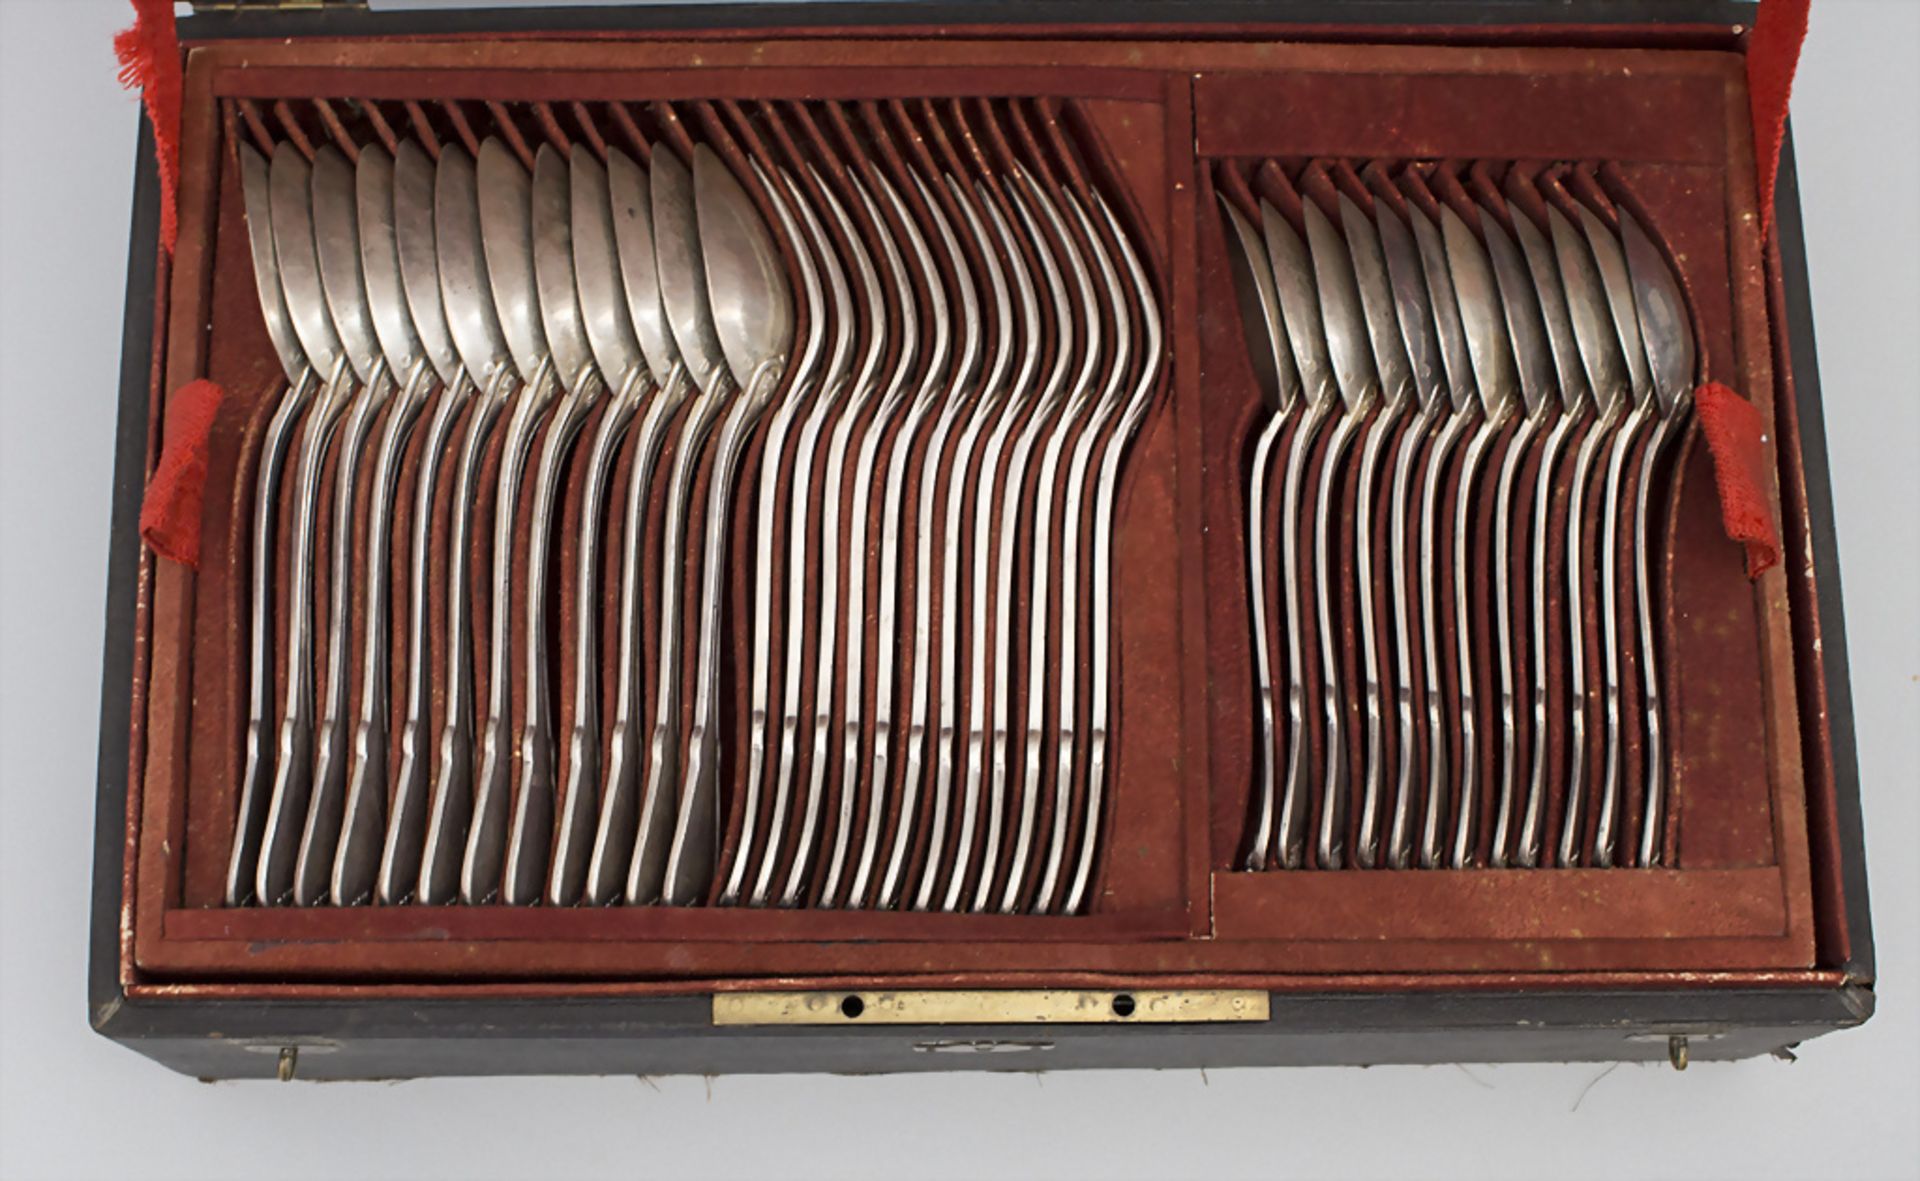 Silberbesteck 61 tlg. / A set of 61 pieces silver cutlery, Hènin Frères, Paris, 1865-1872 - Image 11 of 12